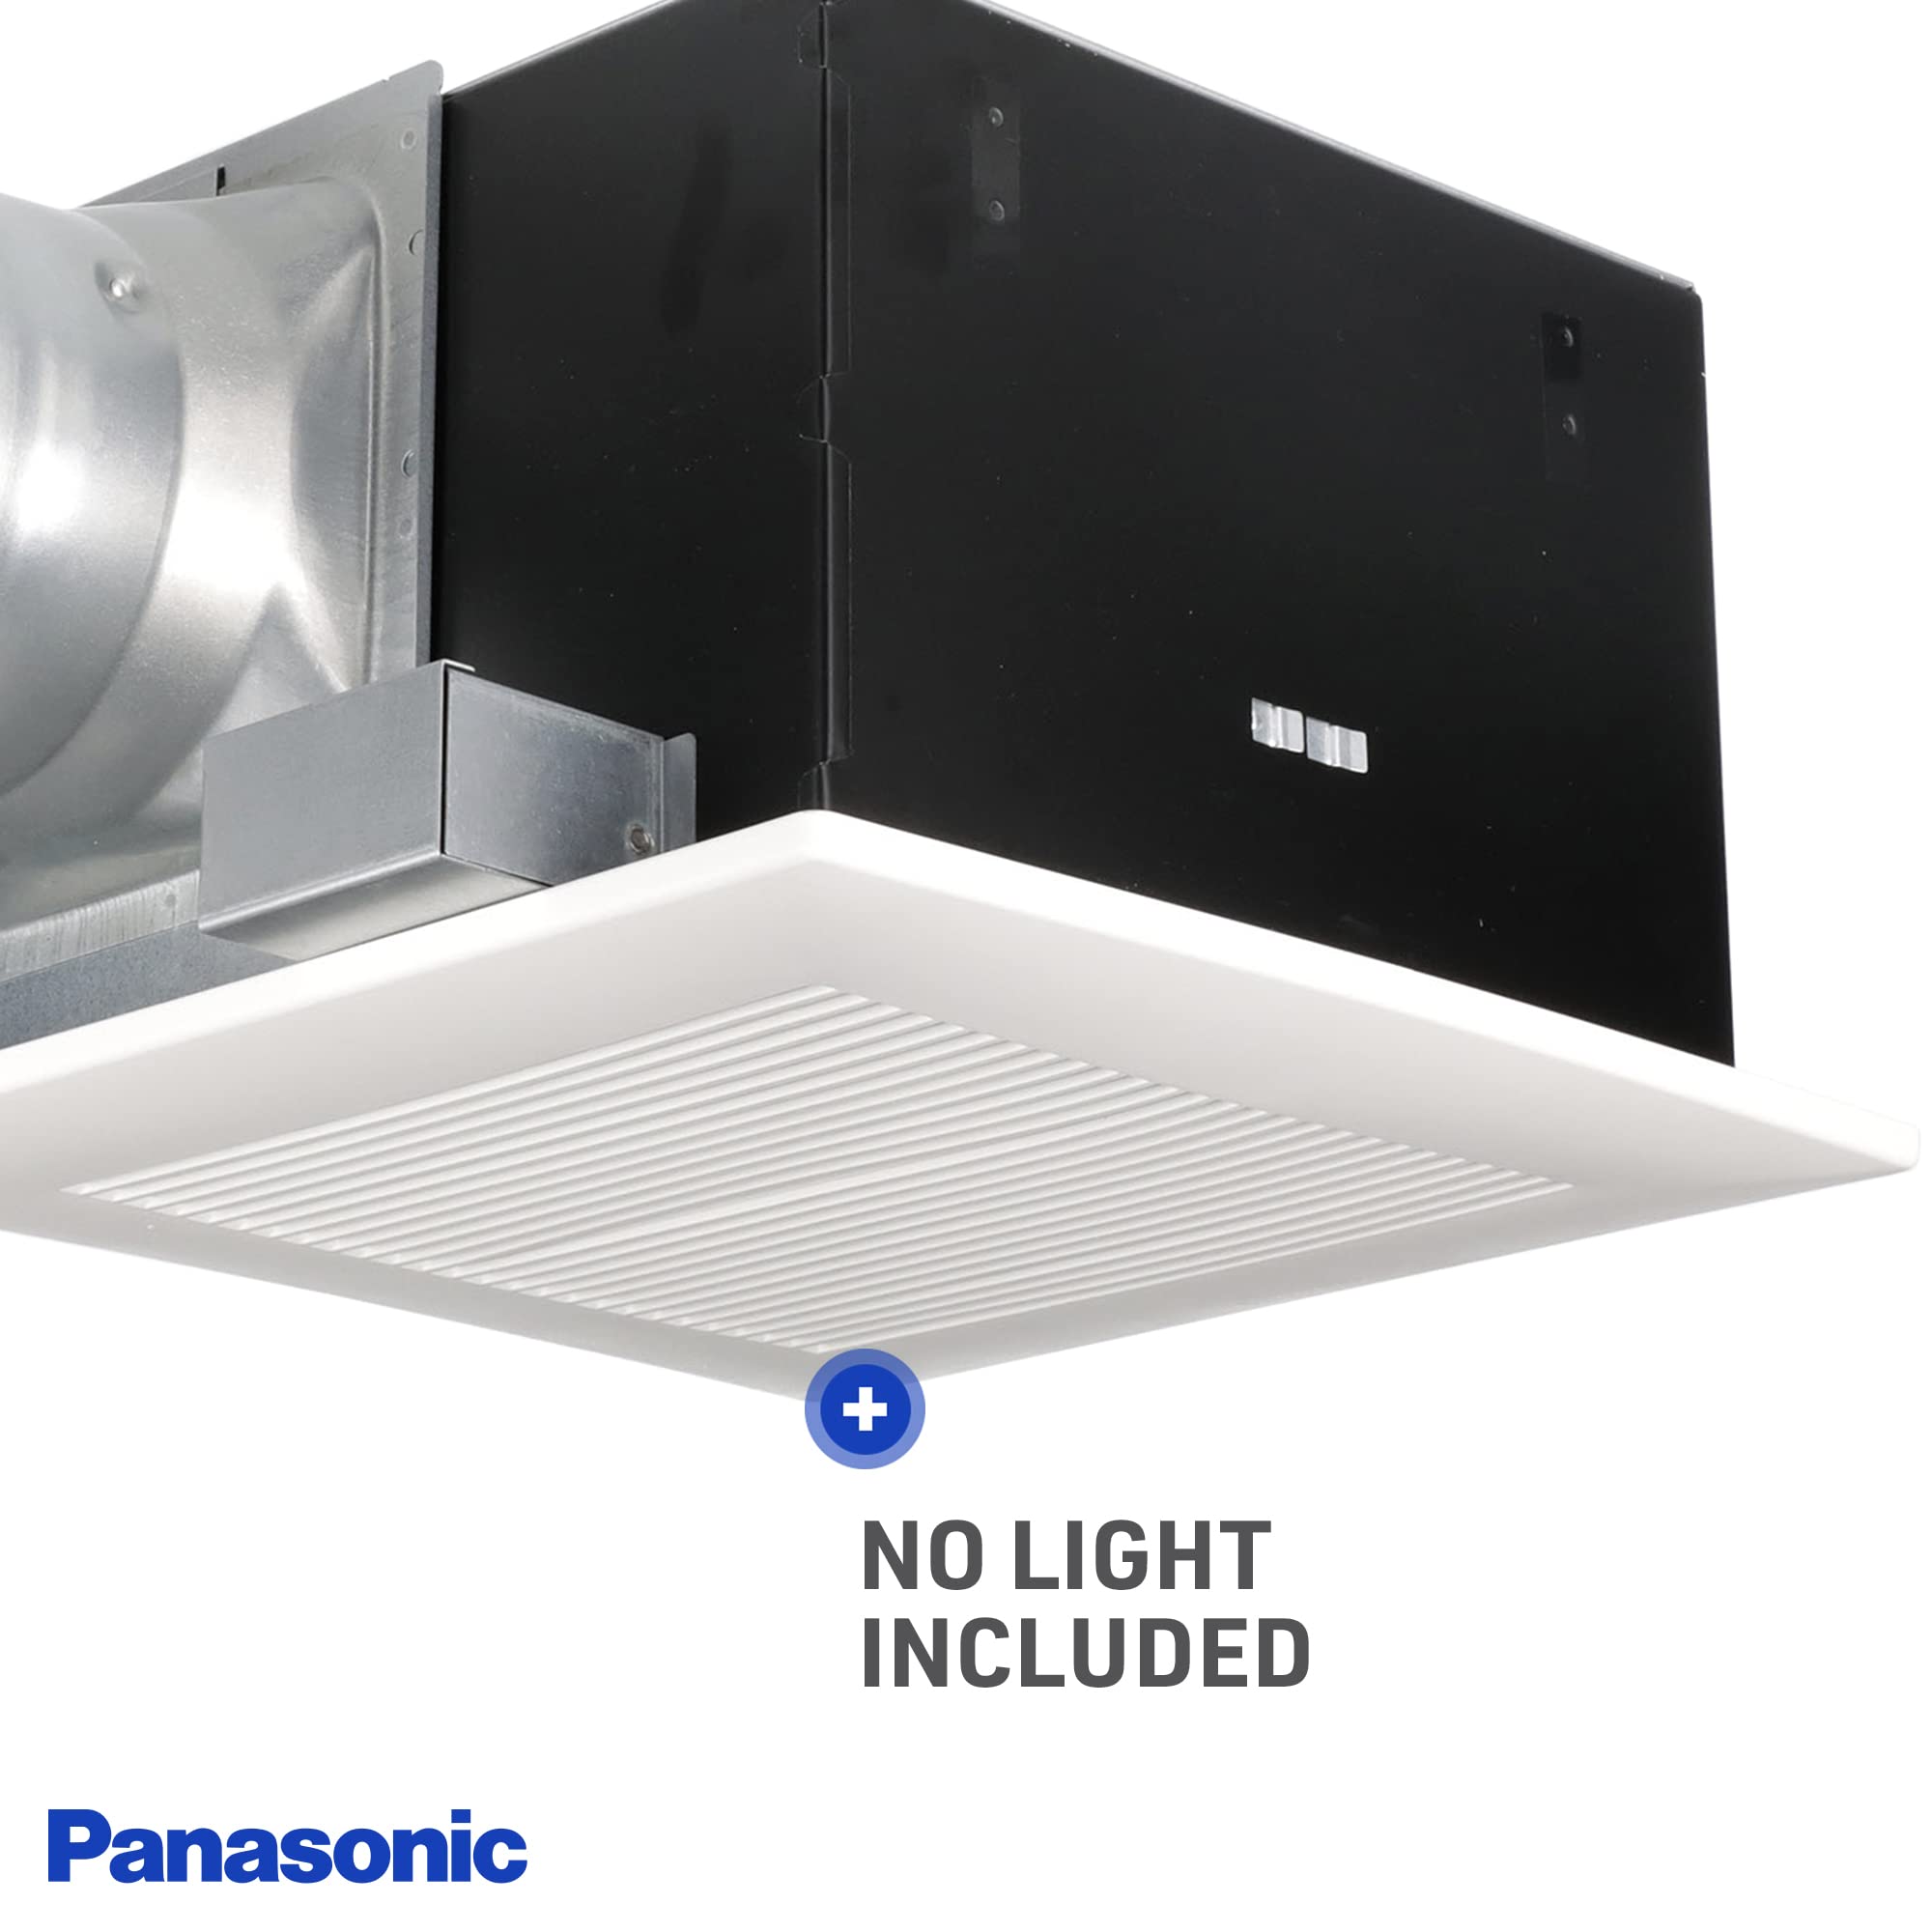 Panasonic FV-20VQ3 WhisperCeiling Spot Ventilation Fan - 190 CFM - Quiet Ceiling Mount Bathroom Fan